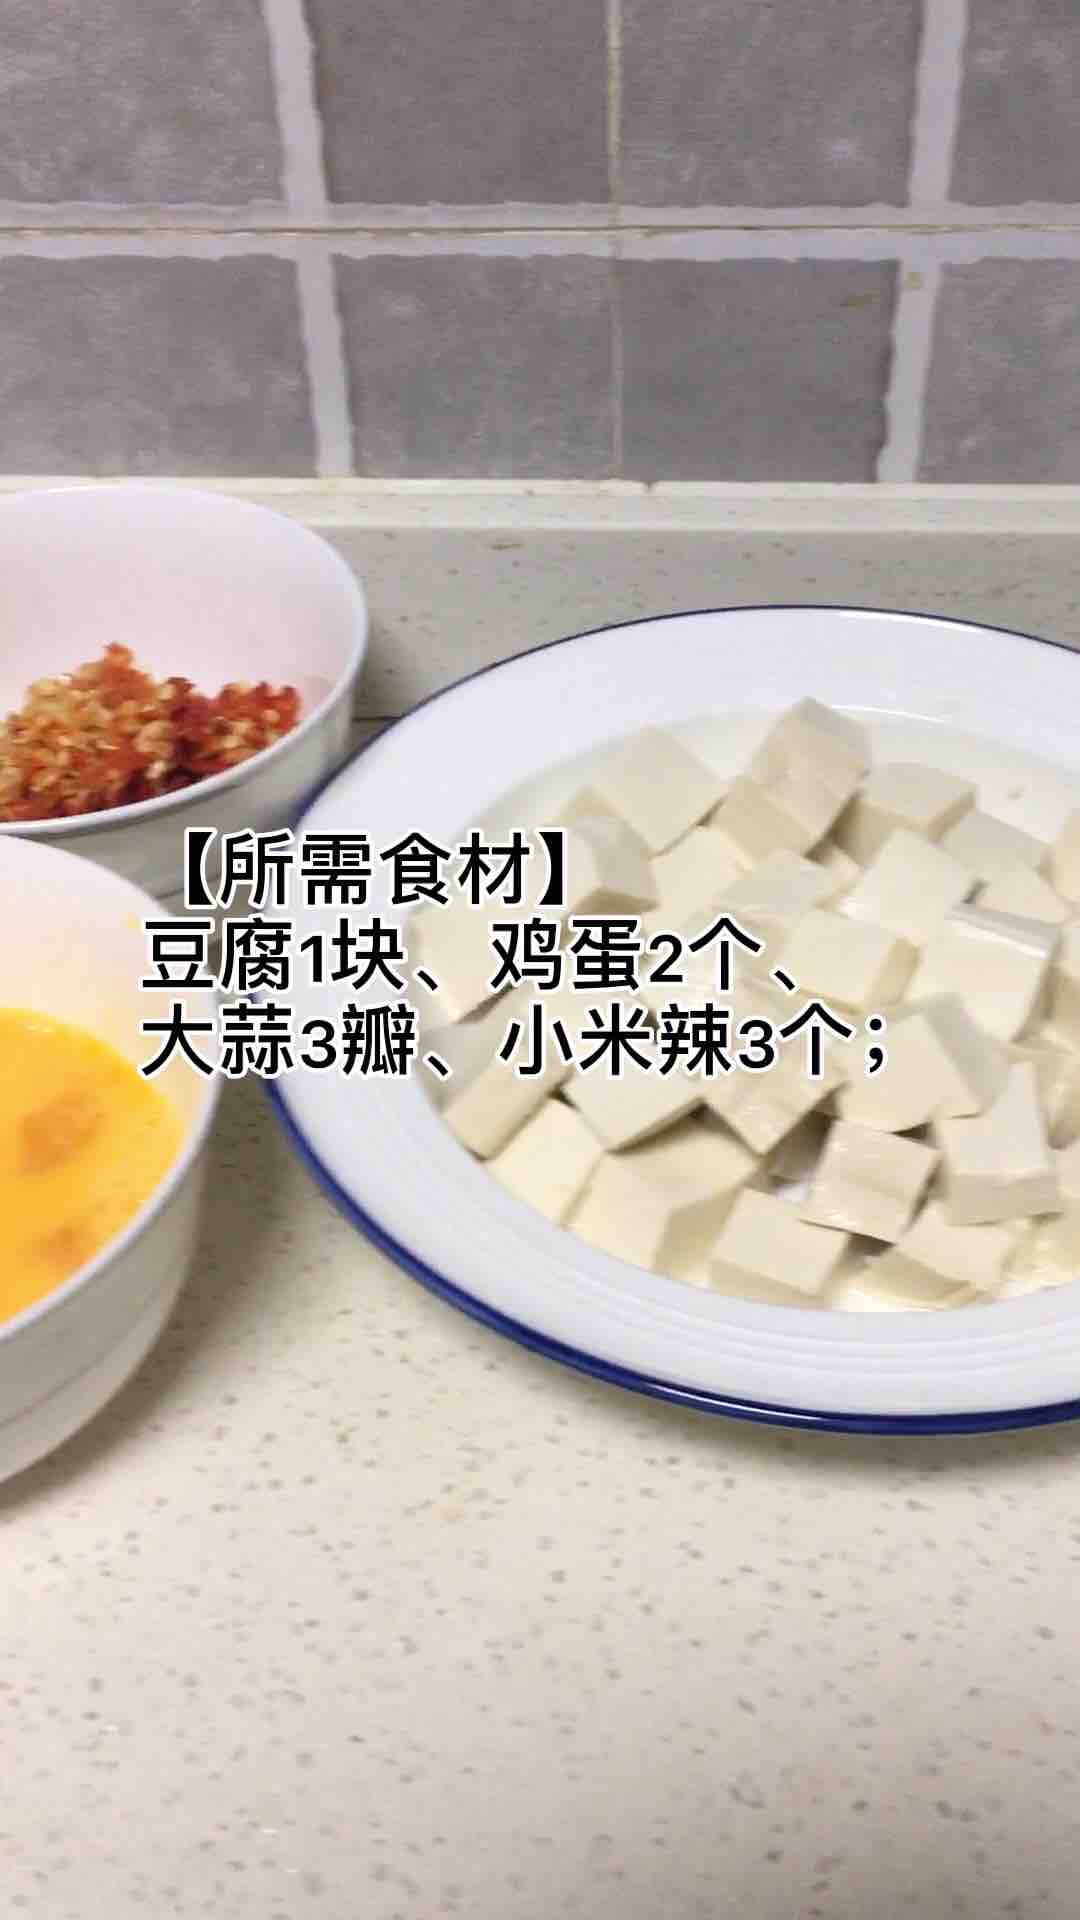 Tofu and Eggs recipe